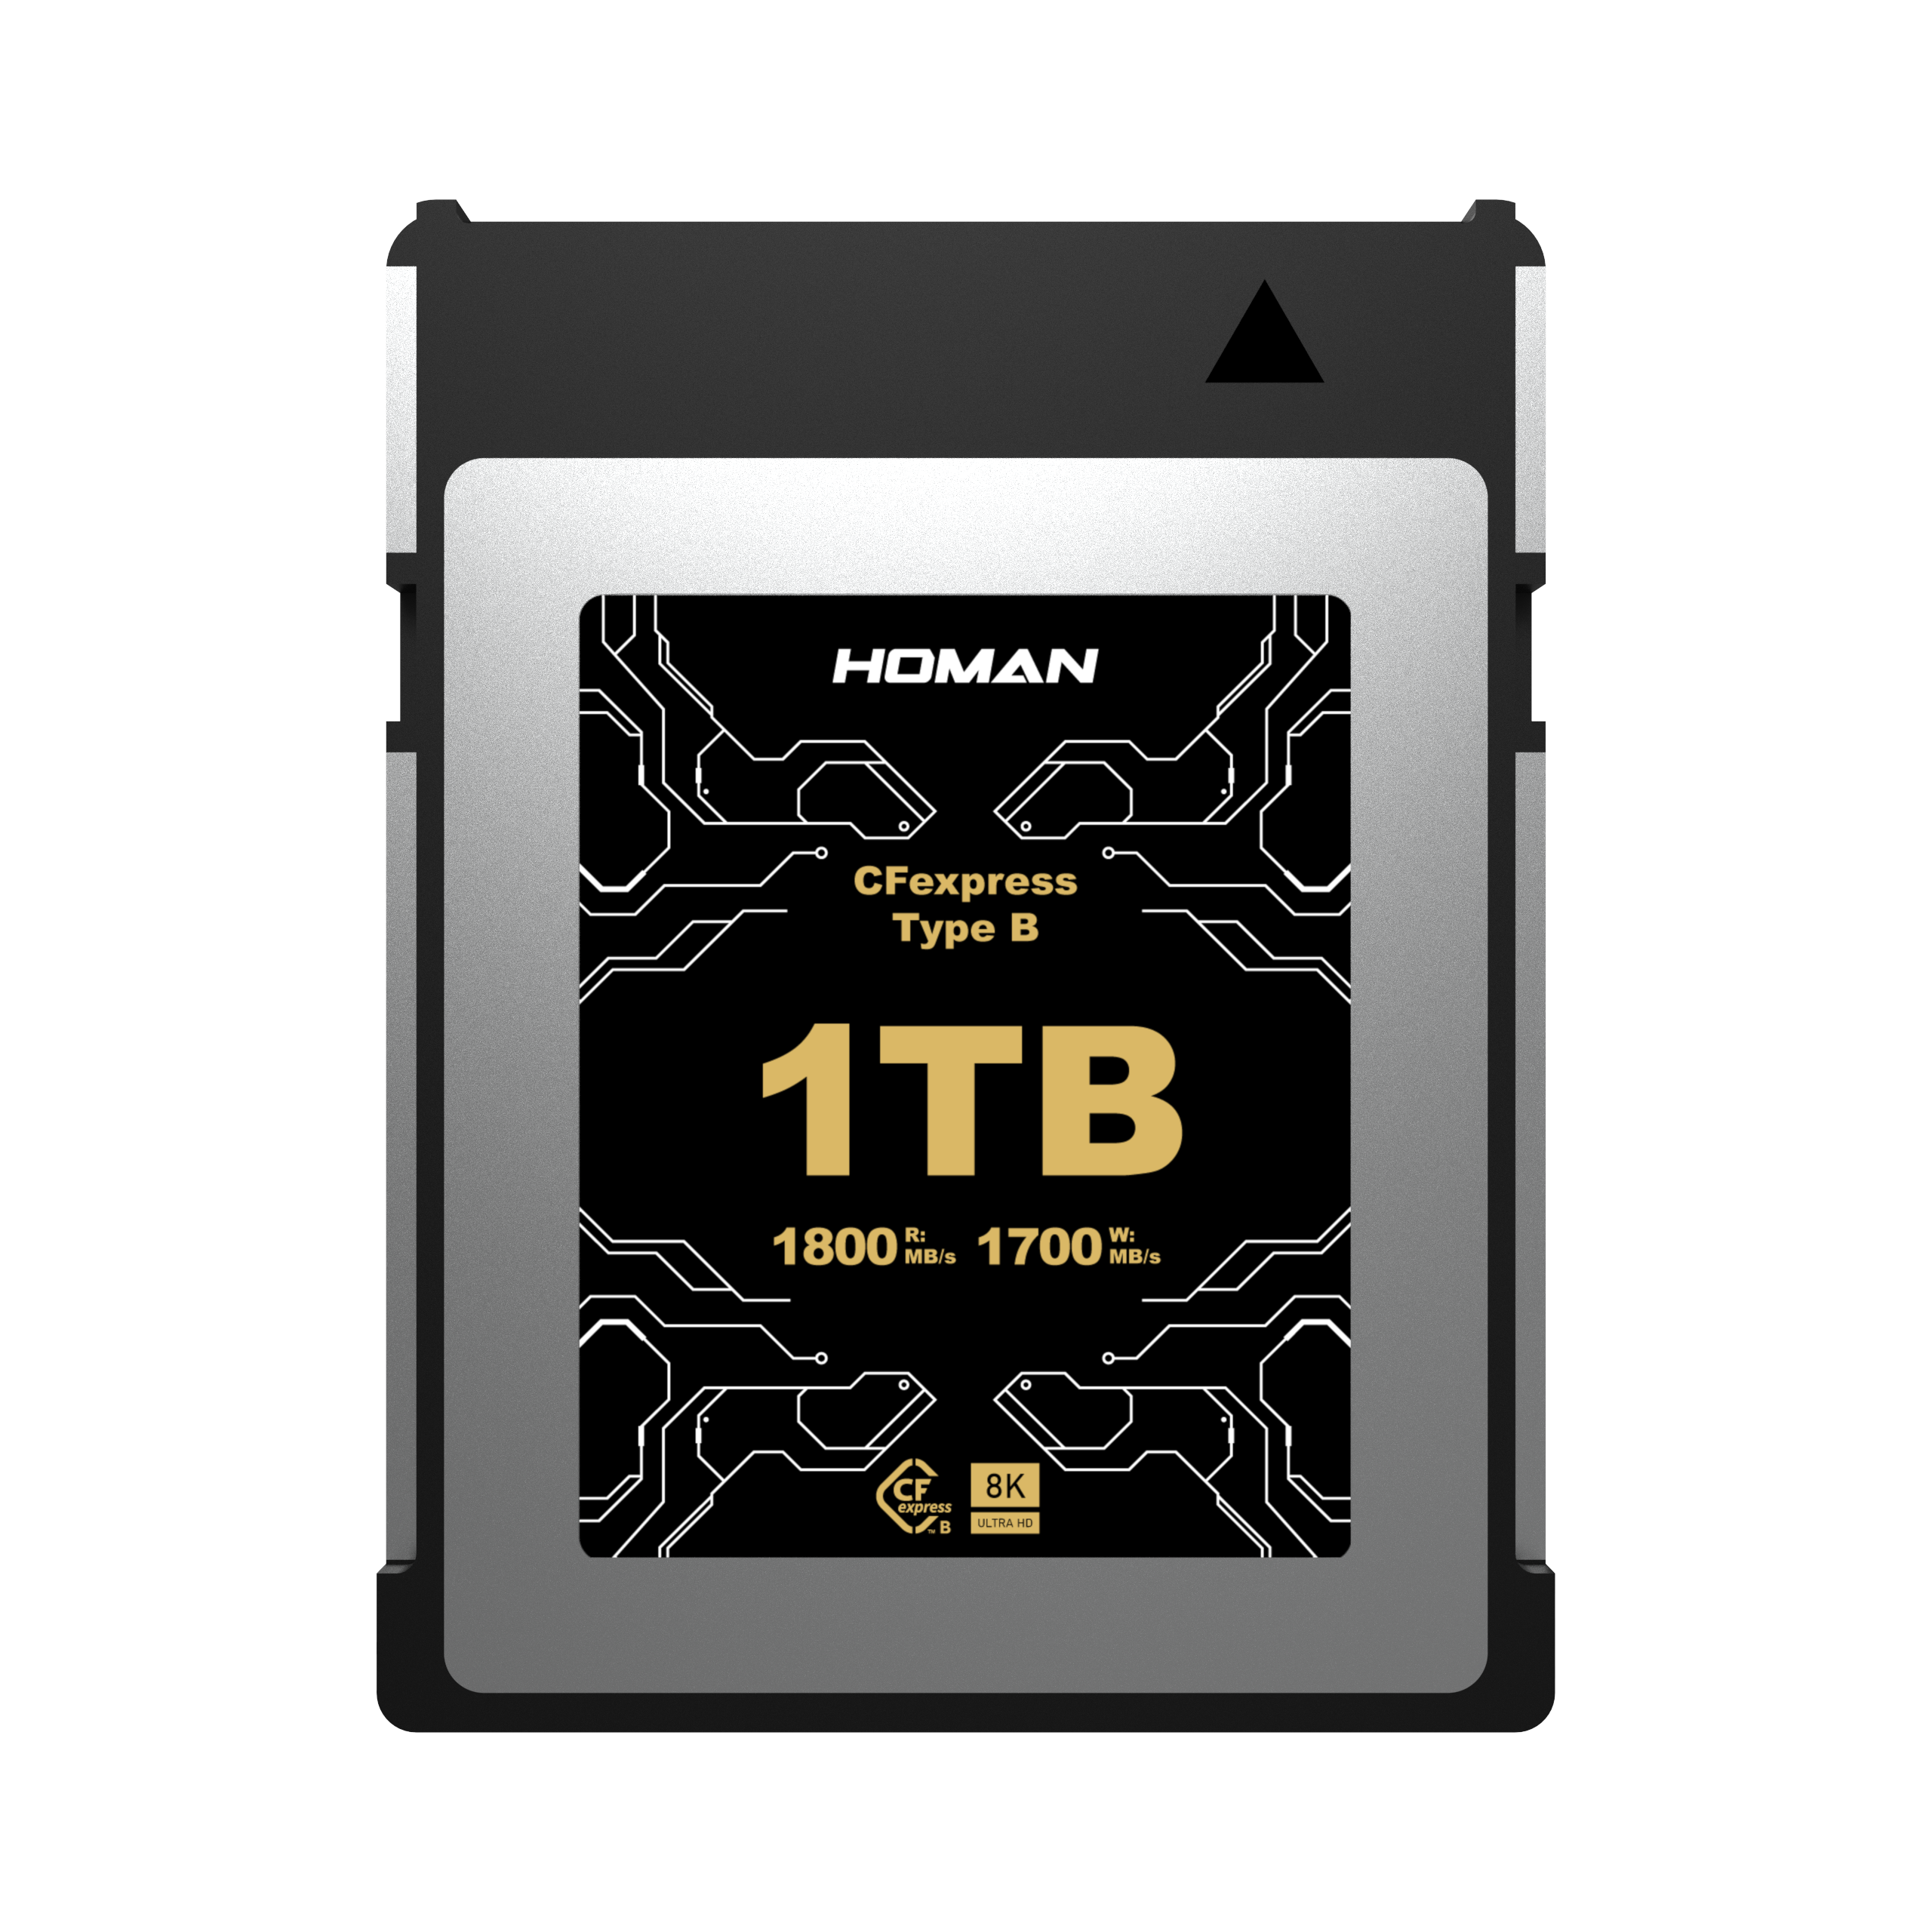 HOMAN CFexpress Card Type B 1TB